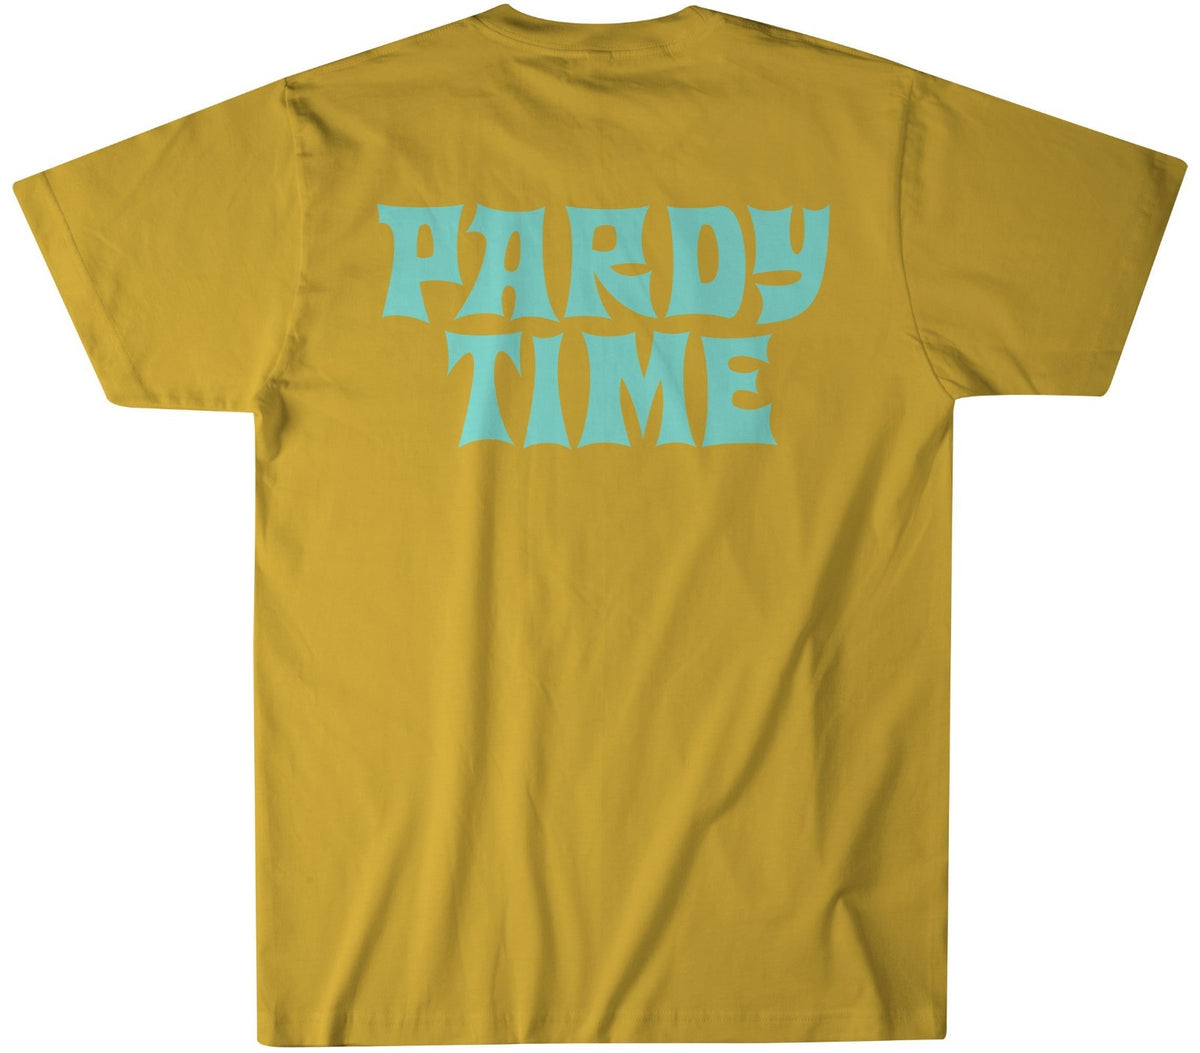 PARDY TIME LOGO TEE - Pardy Time